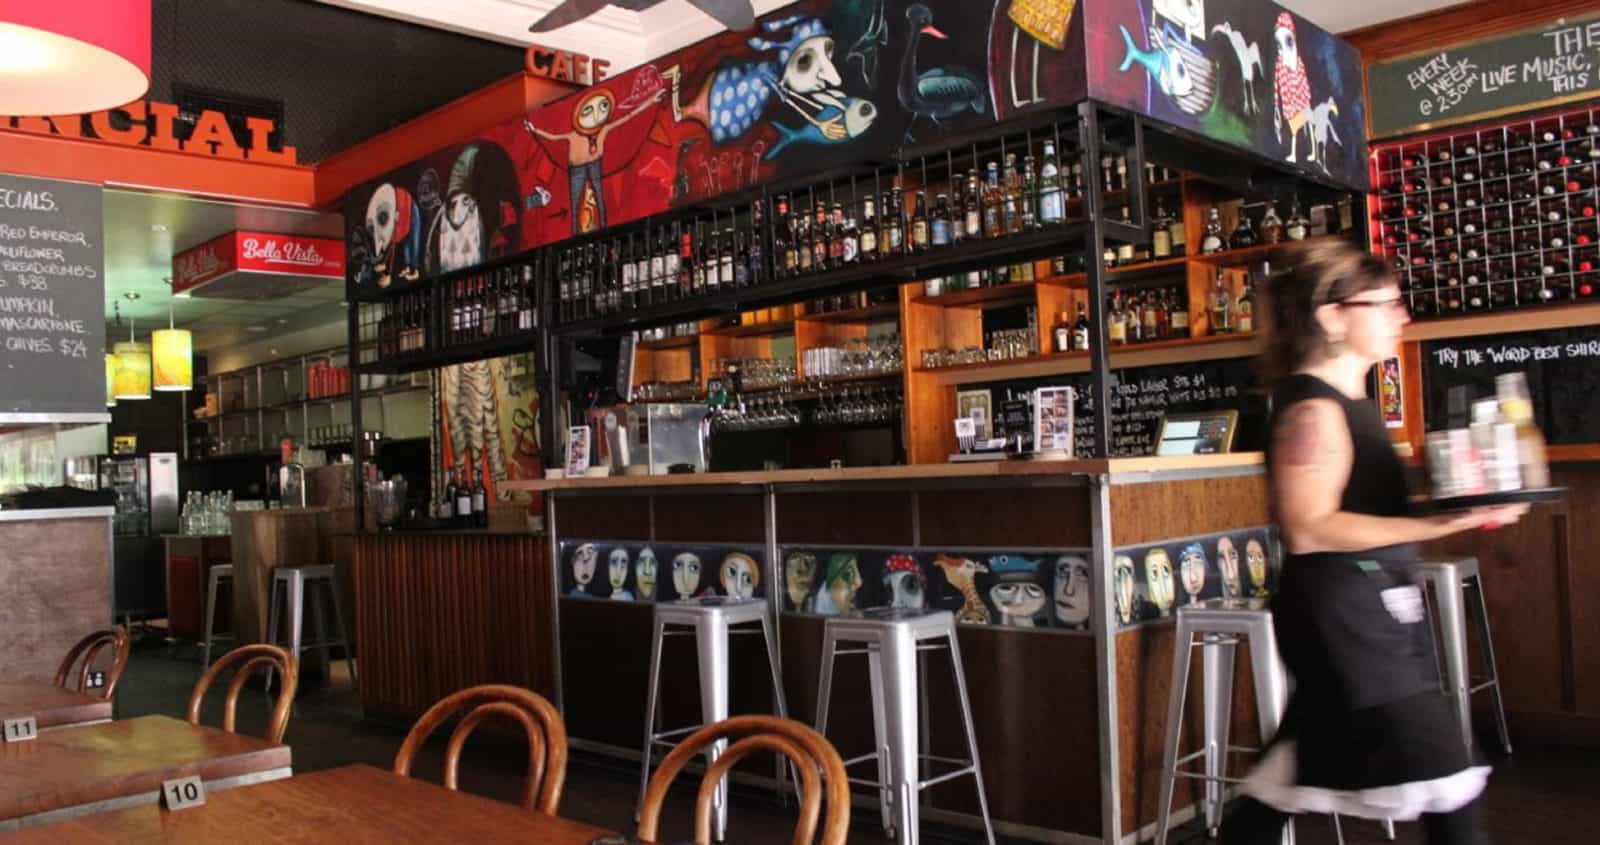 The Provincial Lounge Bar and Restaurant, Geraldton, Western Australia